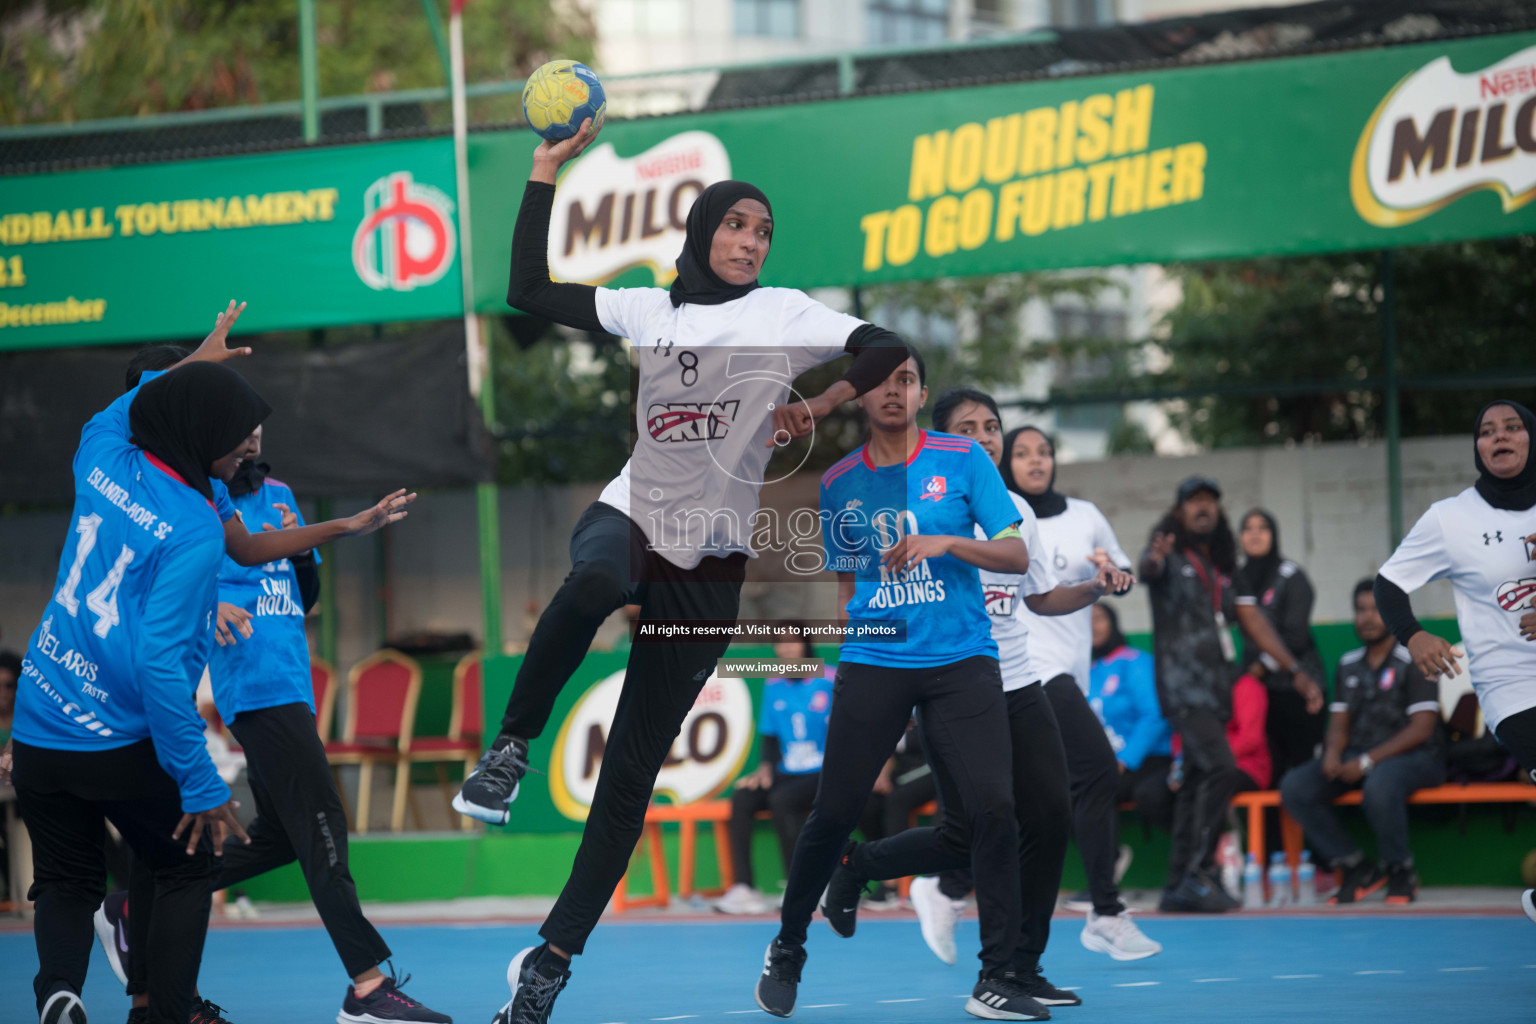 Milo 8th National Handball Tournament Final day 2 Photos by Nausham Waheed